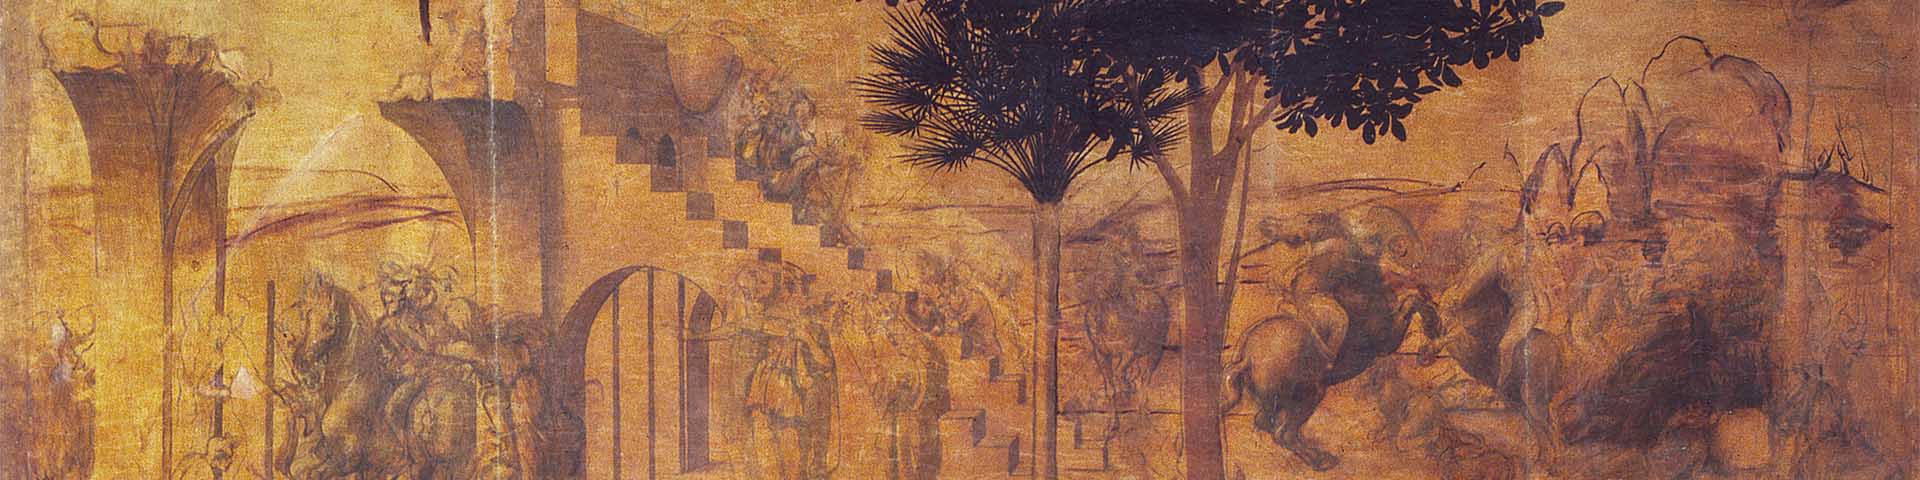 Leonardo da Vinci, Adoration of the Magi